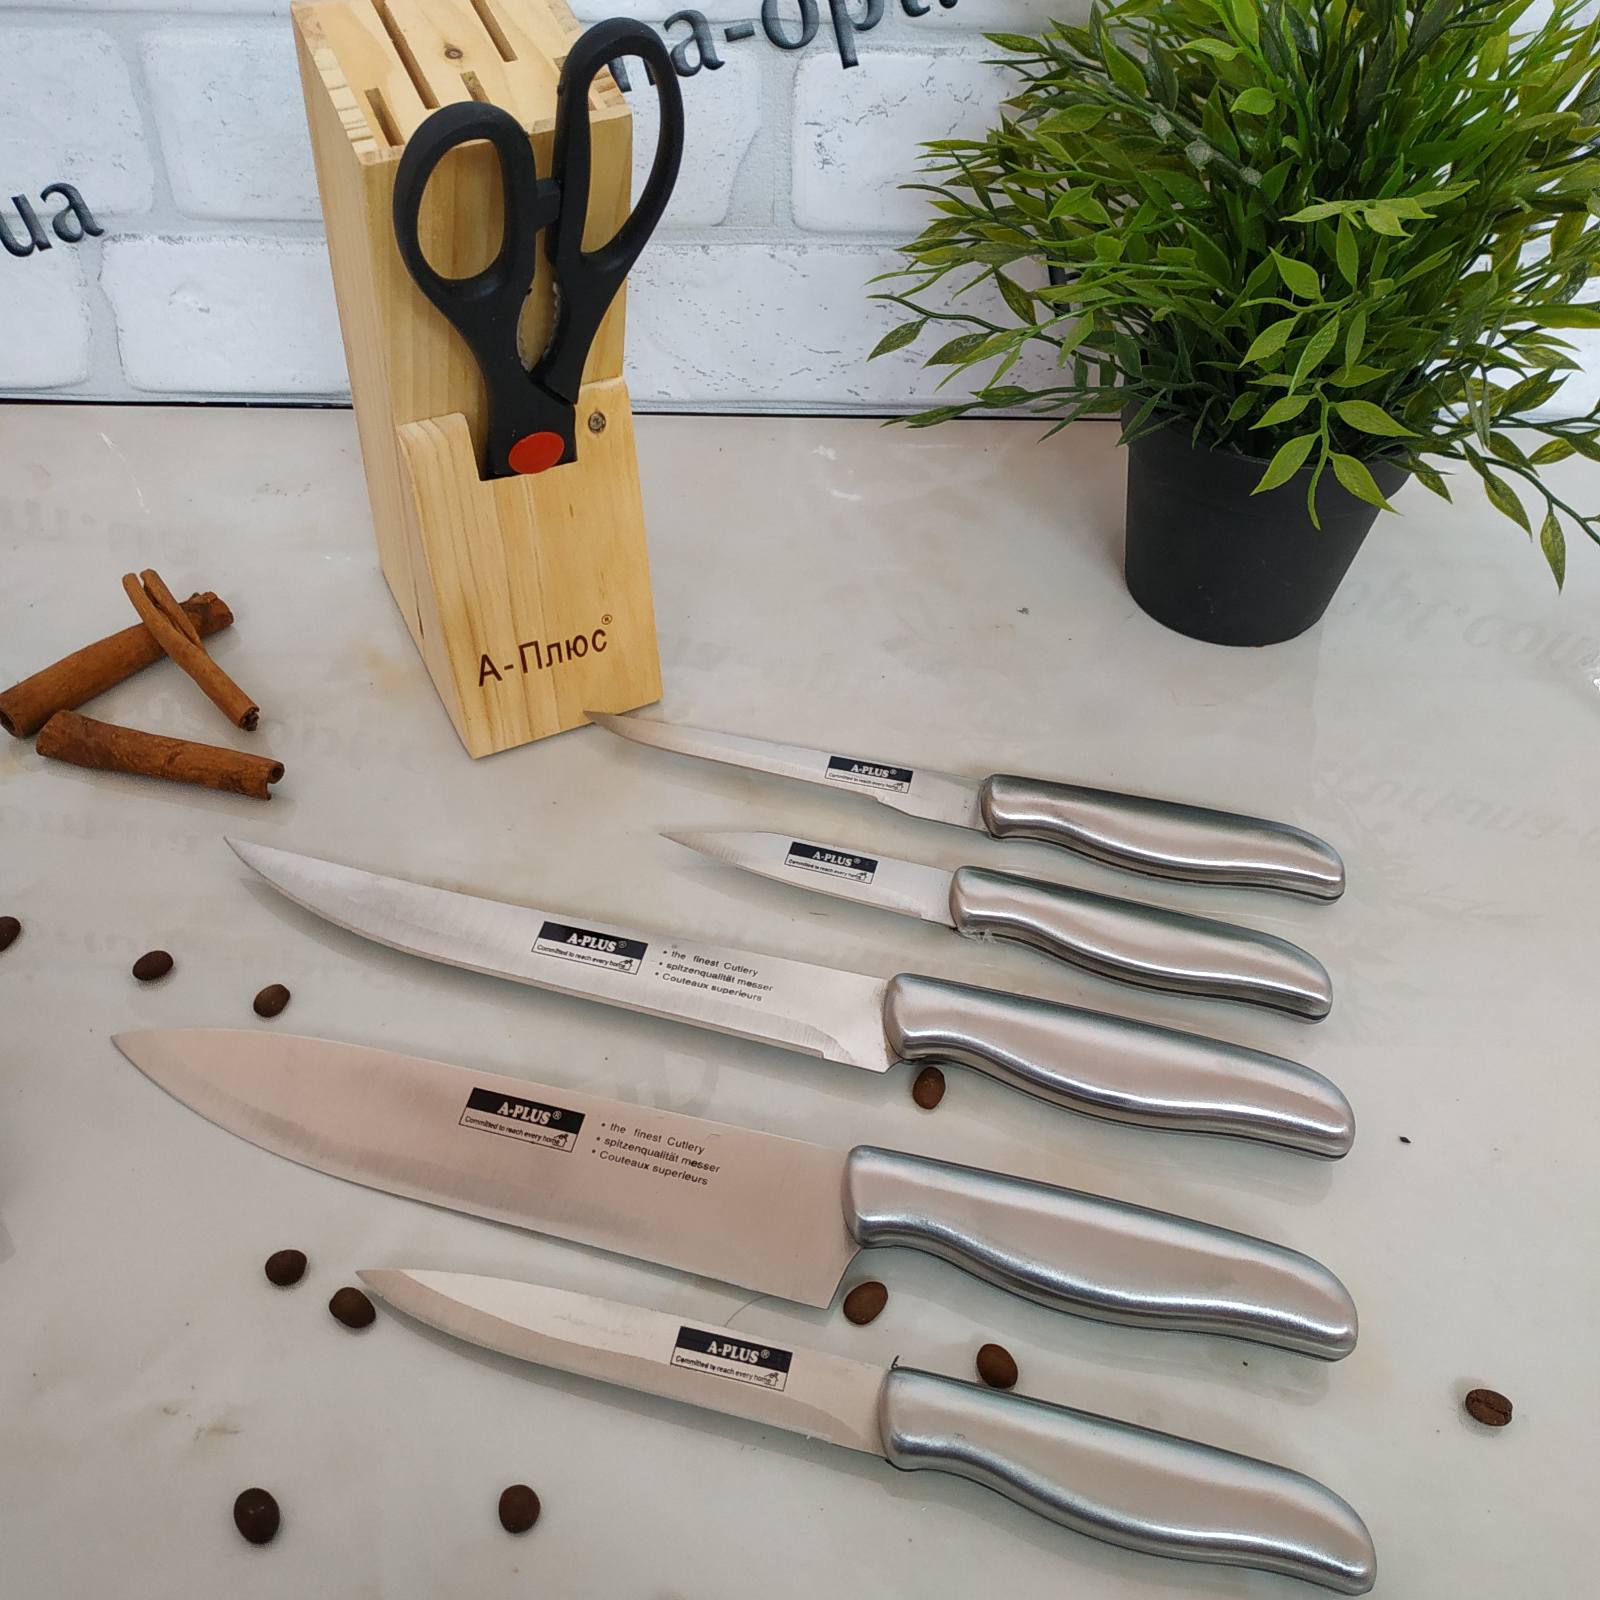 Набор ножей A-Plus - 1006 (7 предметов) ✅ базовая цена $9.66 ✔ Опт ✔ Скидки ✔ Заходите! - Интернет-магазин ✅ Фортуна-опт ✅